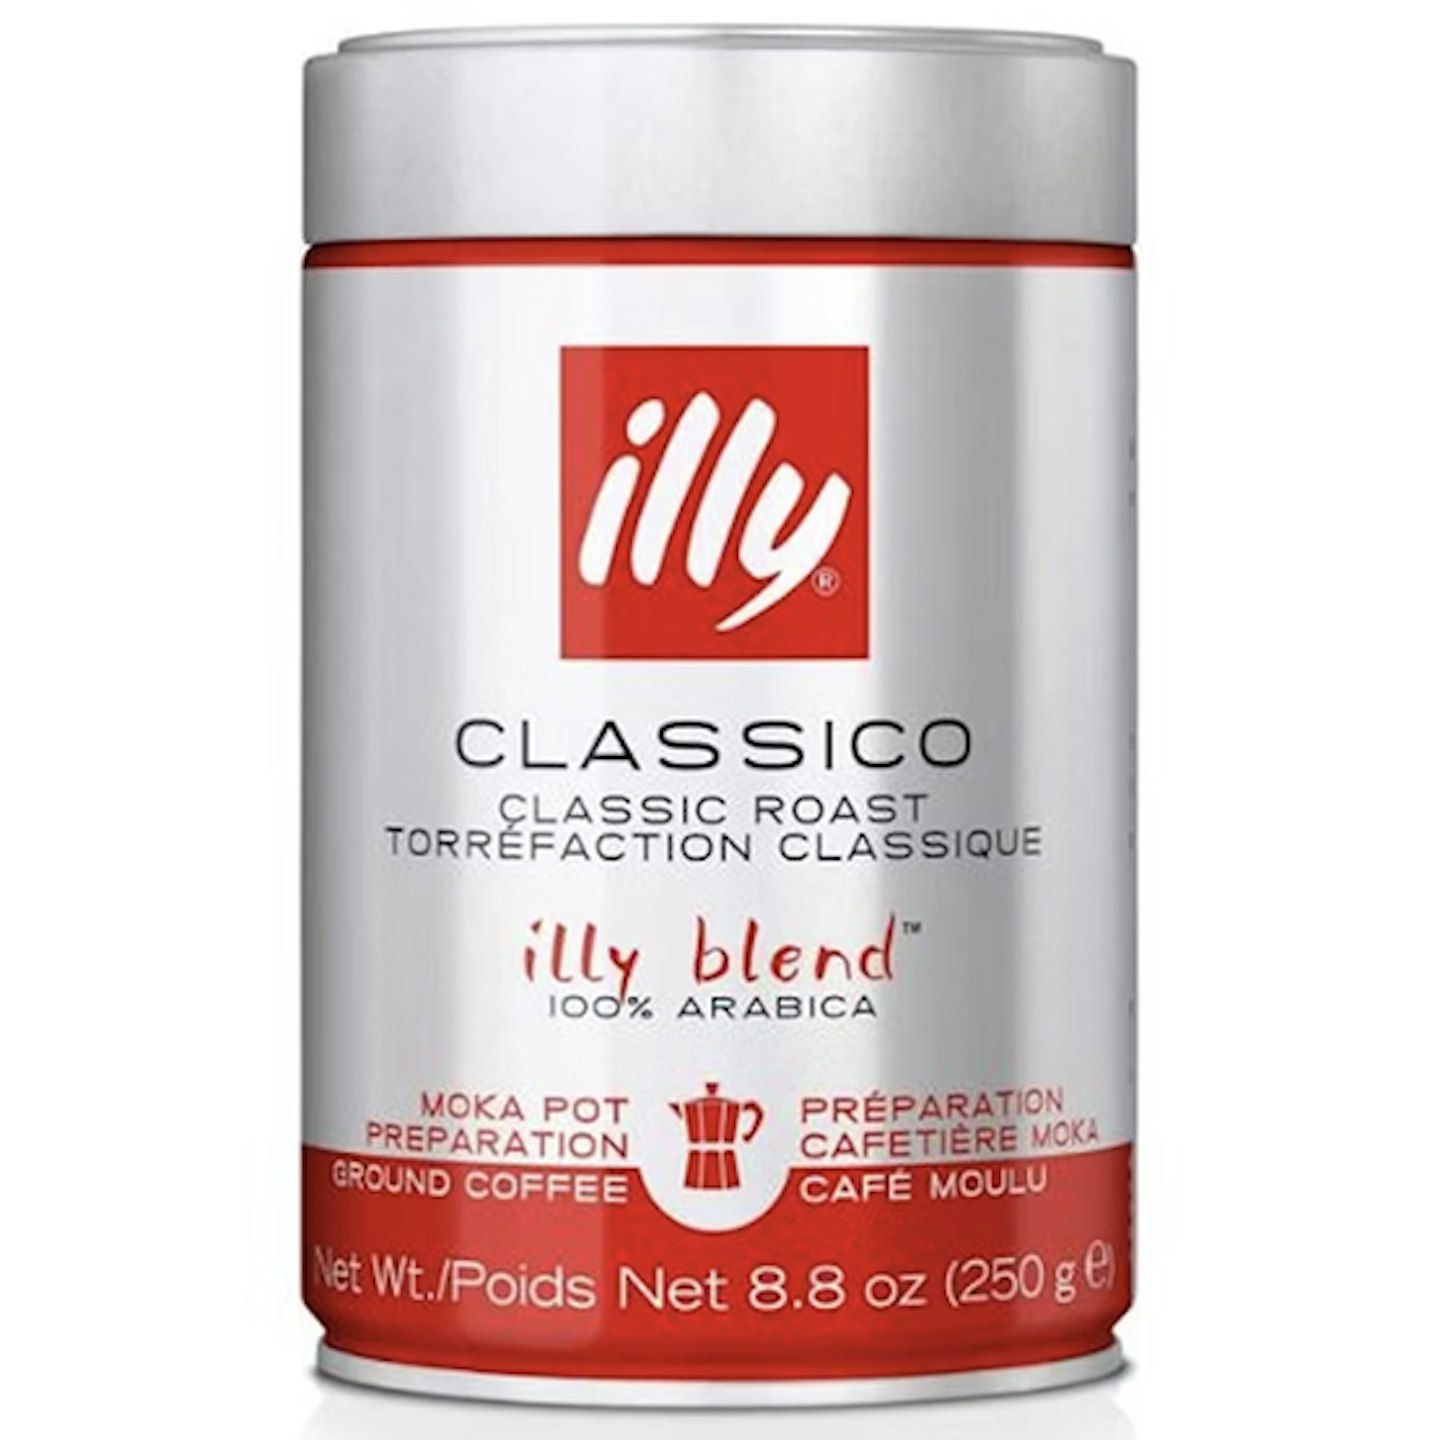 illy-Classico-Ground-Coffee copy